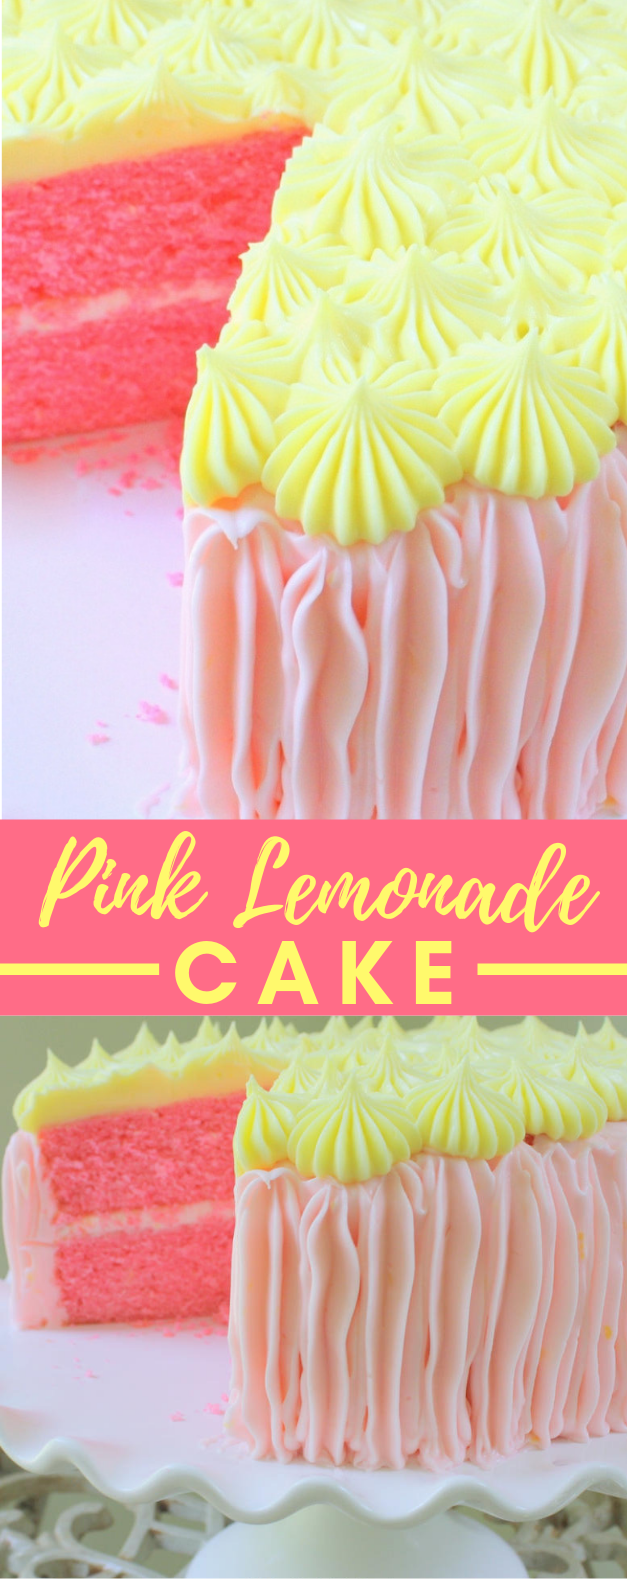 PINK LEMONADE CAKE FROM SCRATCH #dessert #lemon